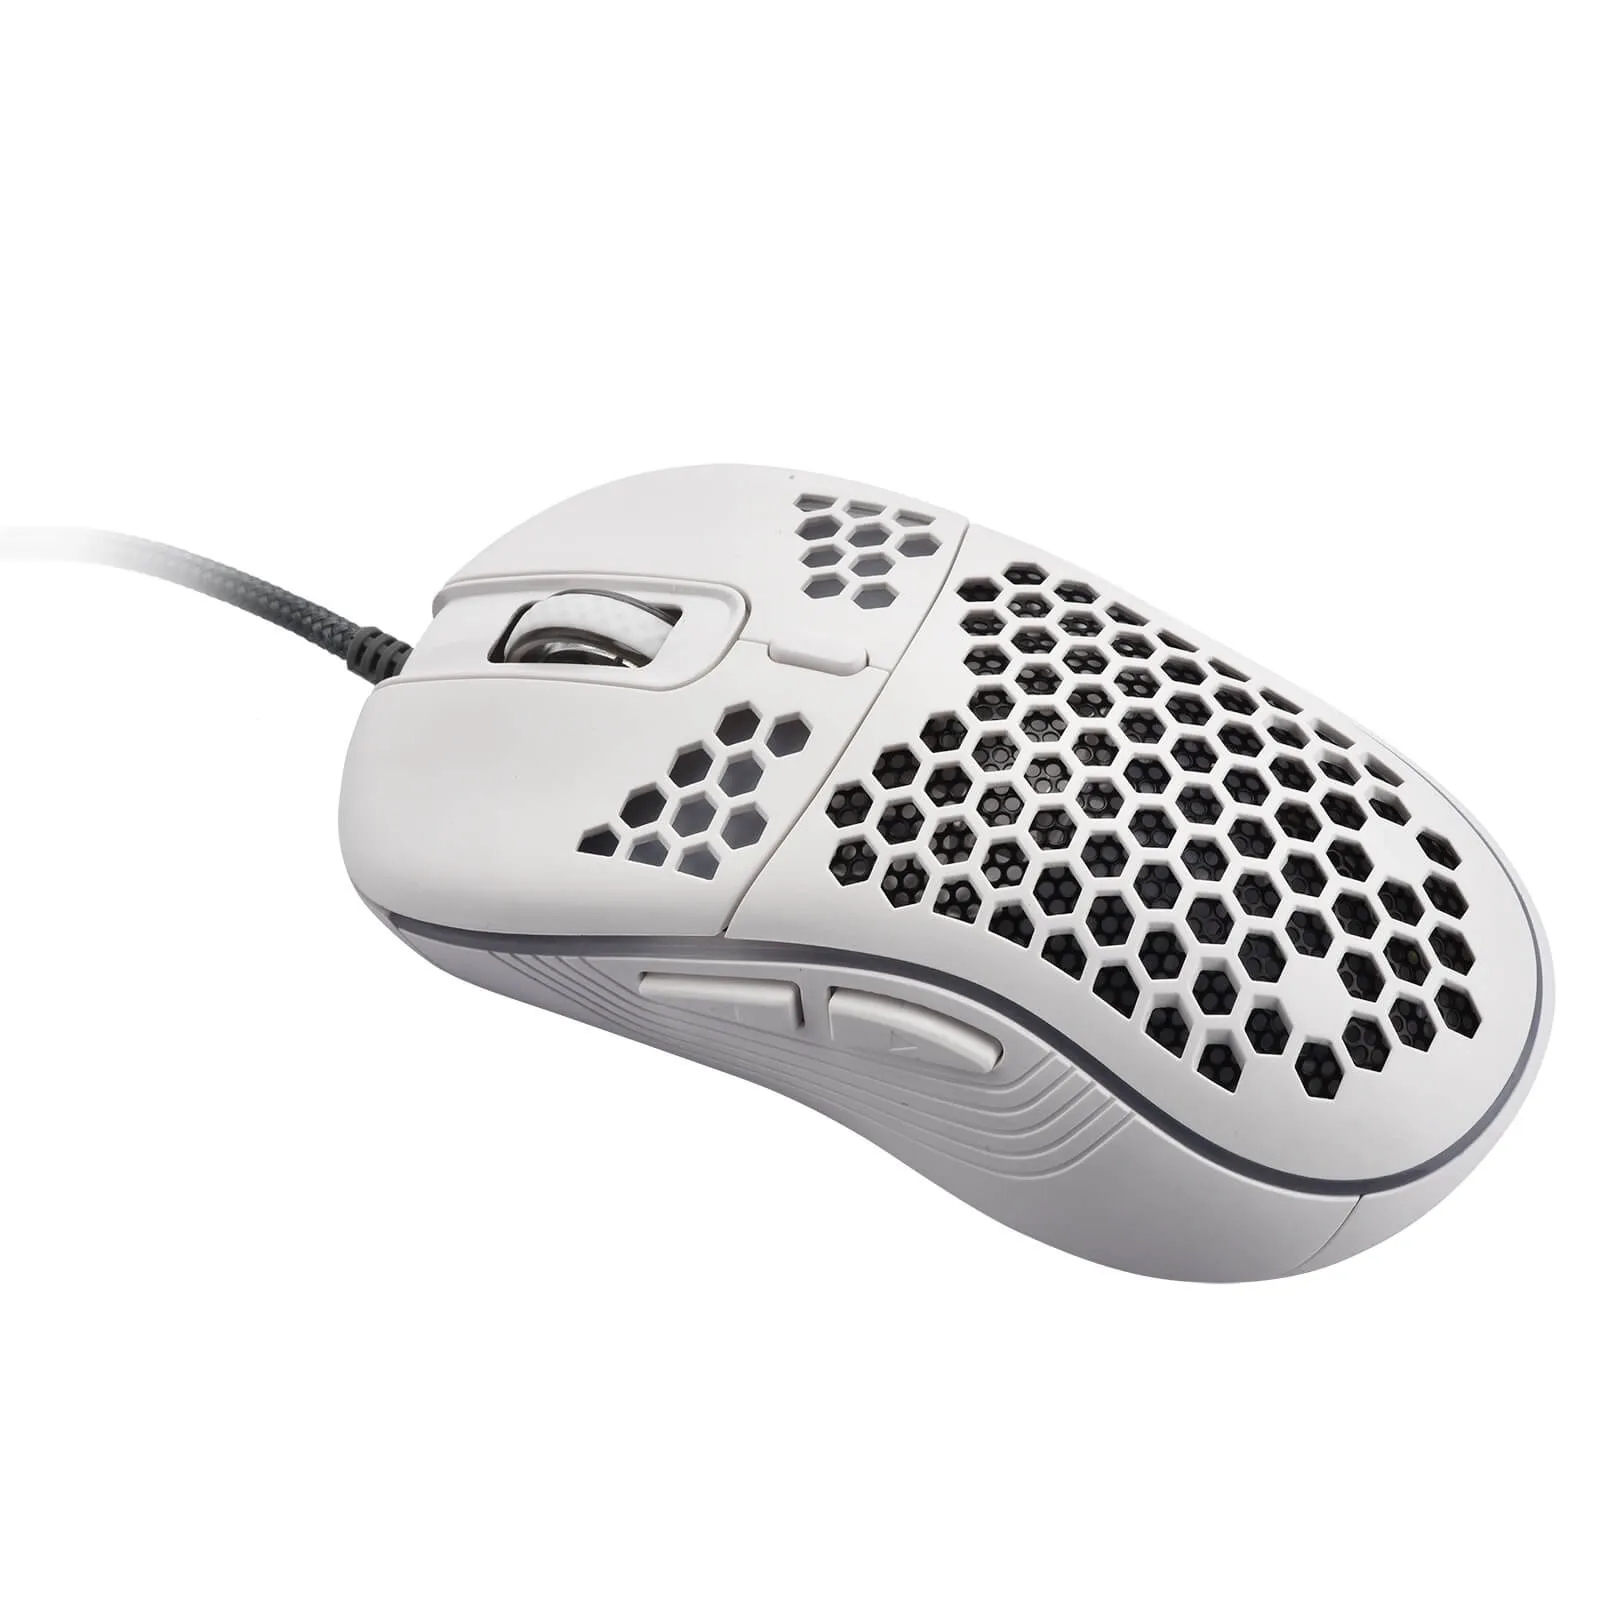 Mouse Gaming Mouse 4 dpi RGB Symphony Light Design Design